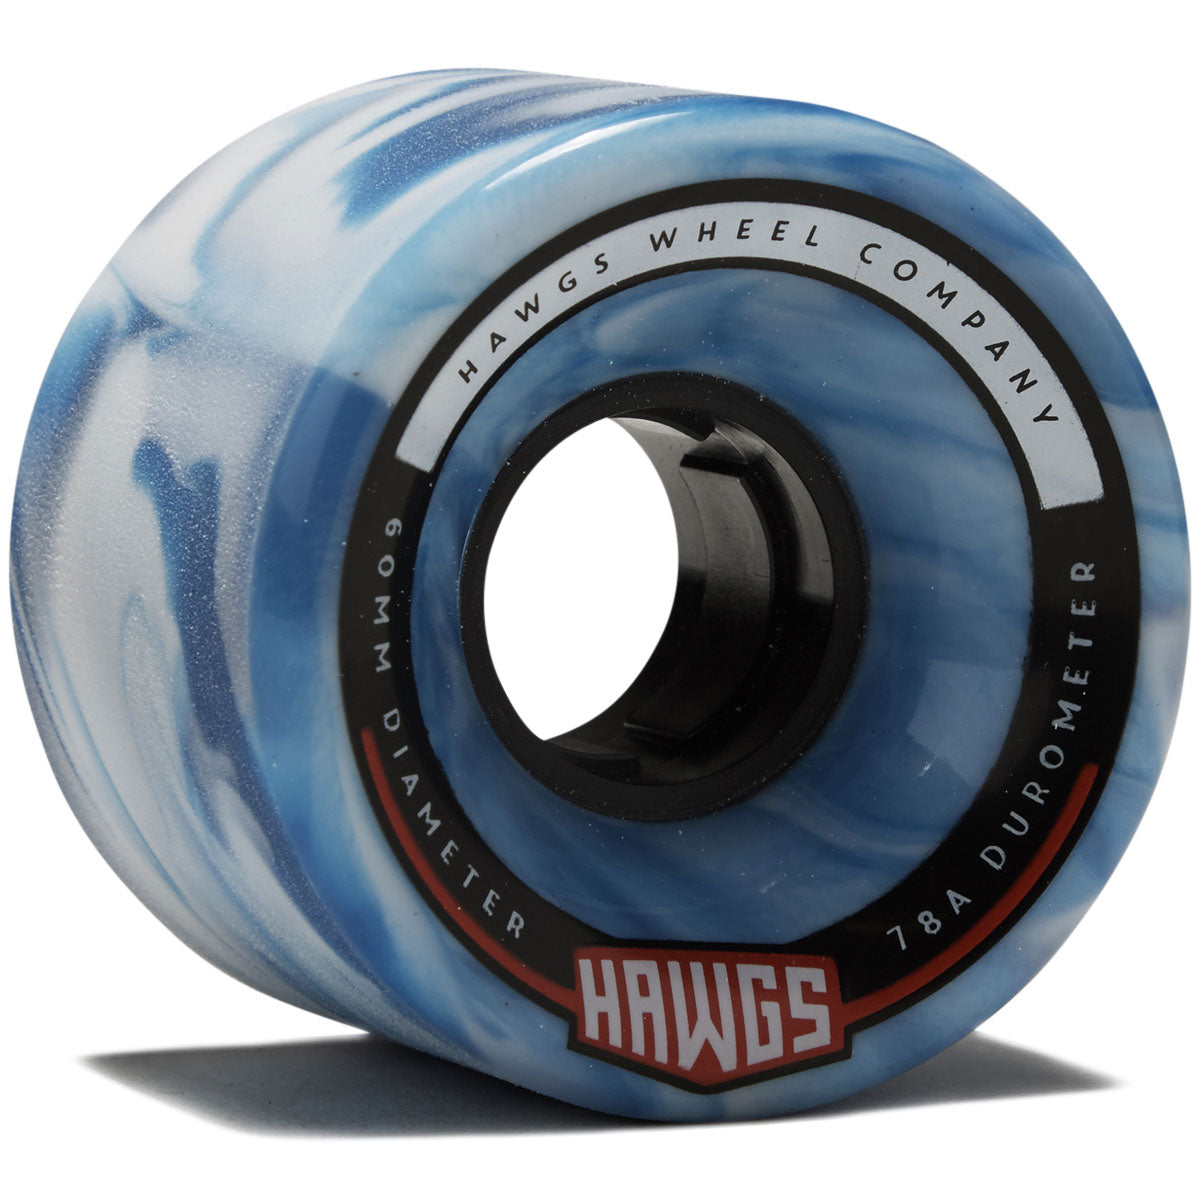 Hawgs Chubby 78a Stone Ground Longboard Wheels - Blue/White - 60mm image 1